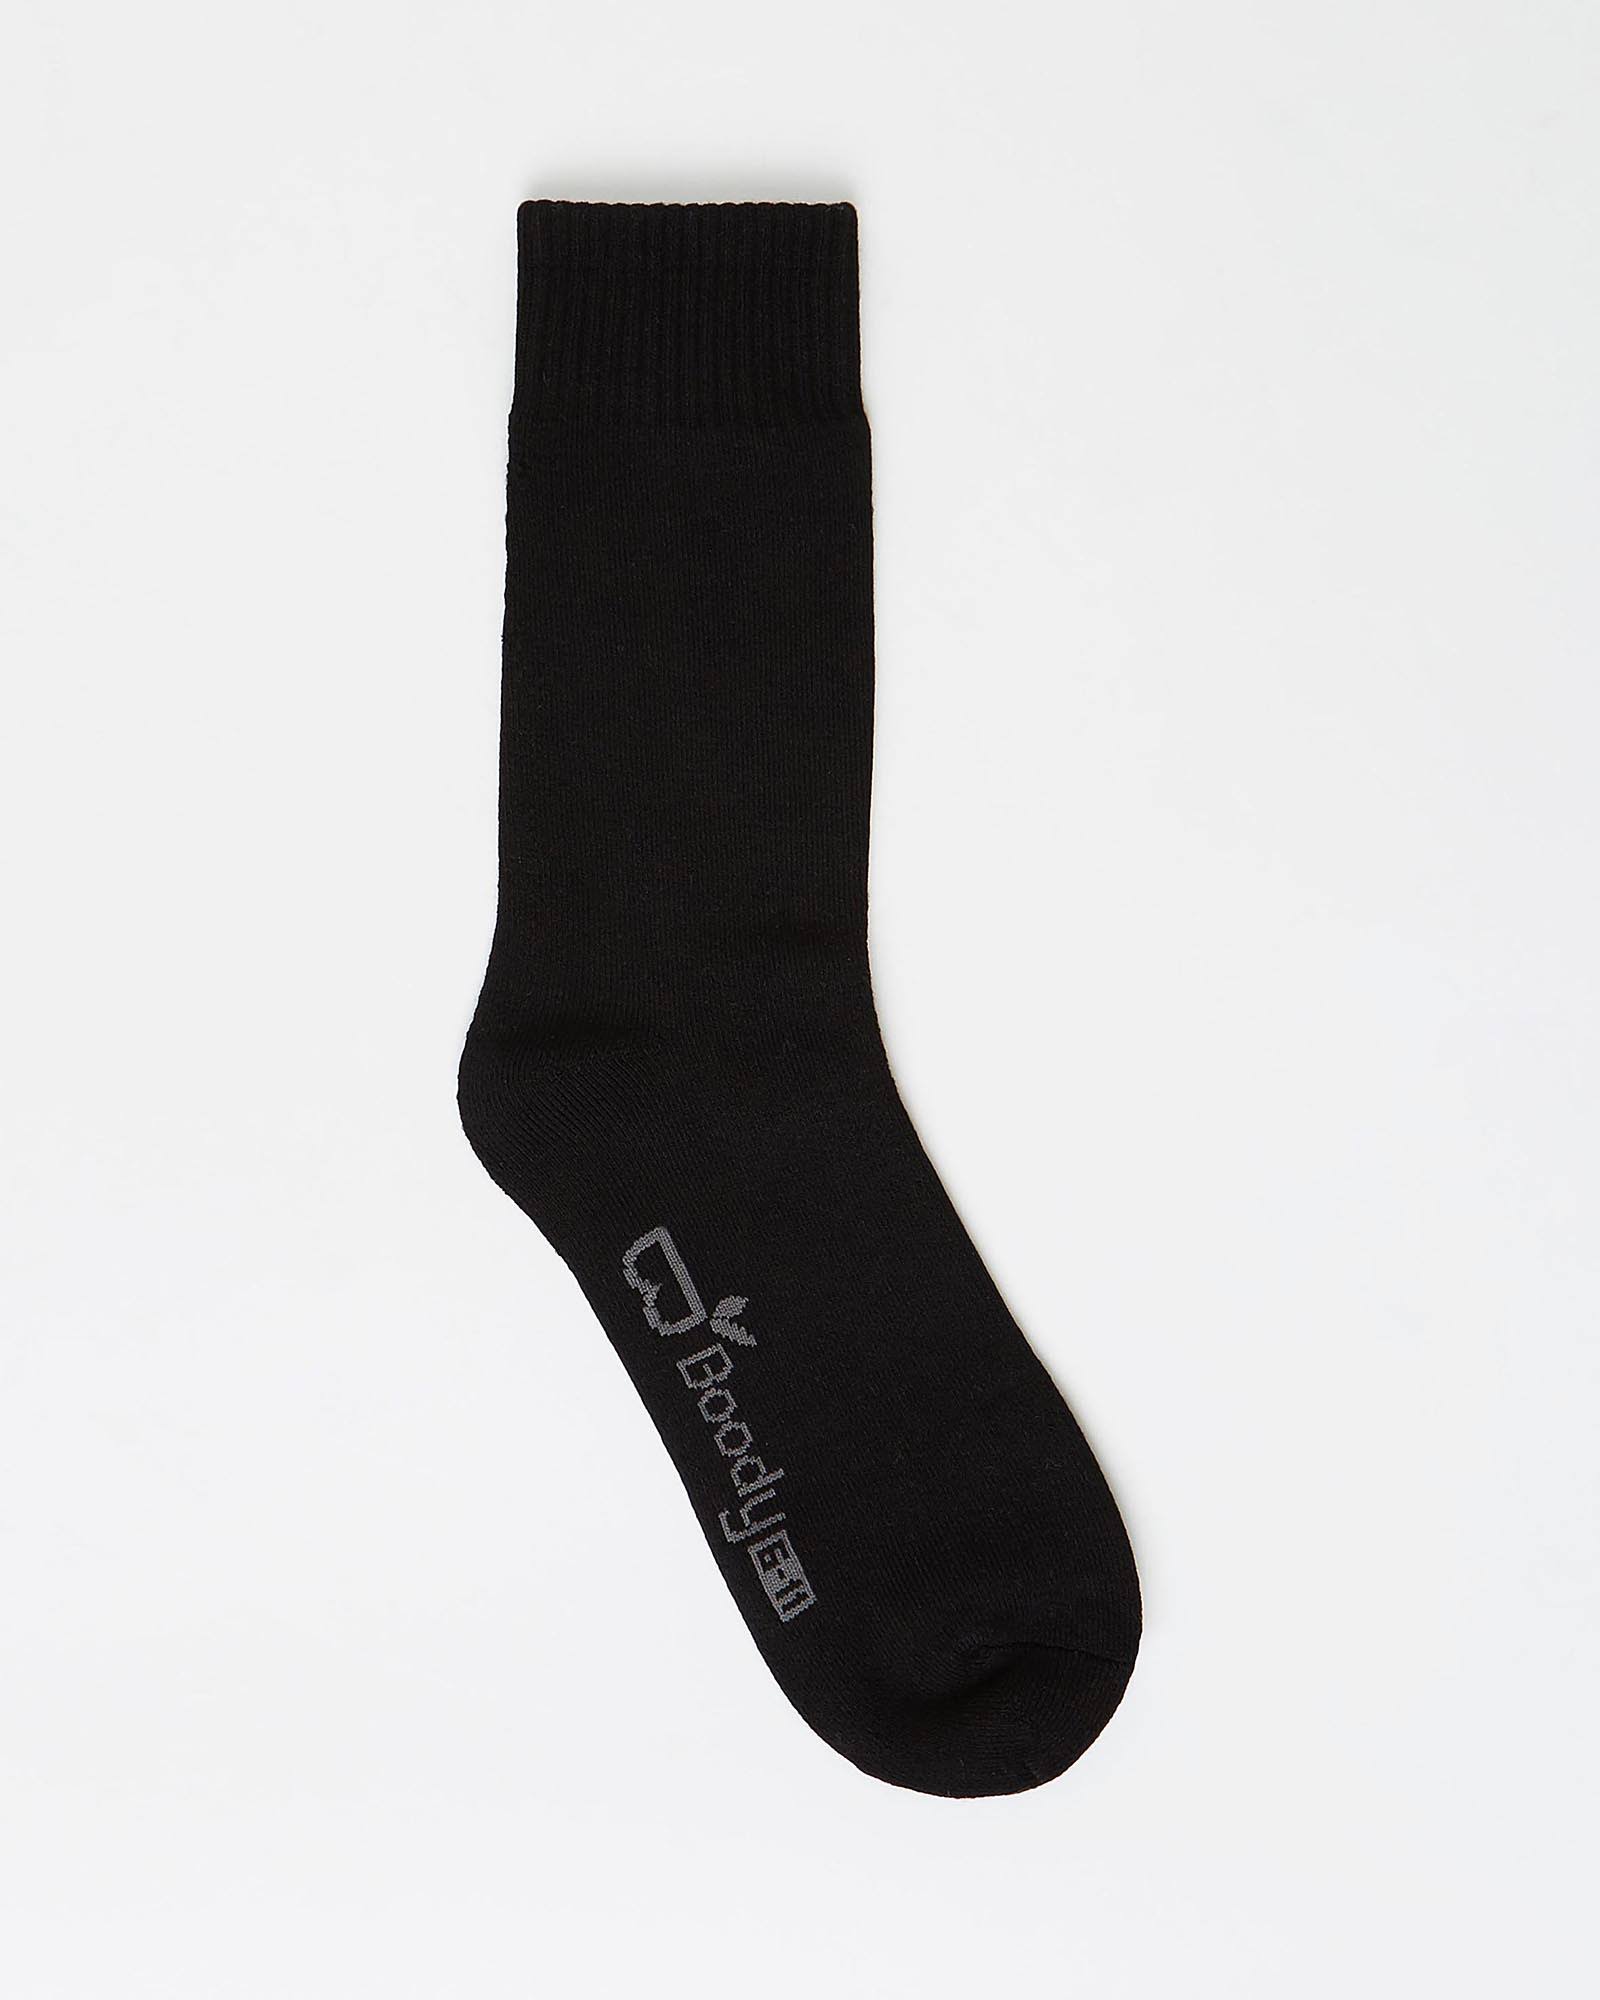 Boody Organic Bamboo Men's Socks - Black, Size 6-11